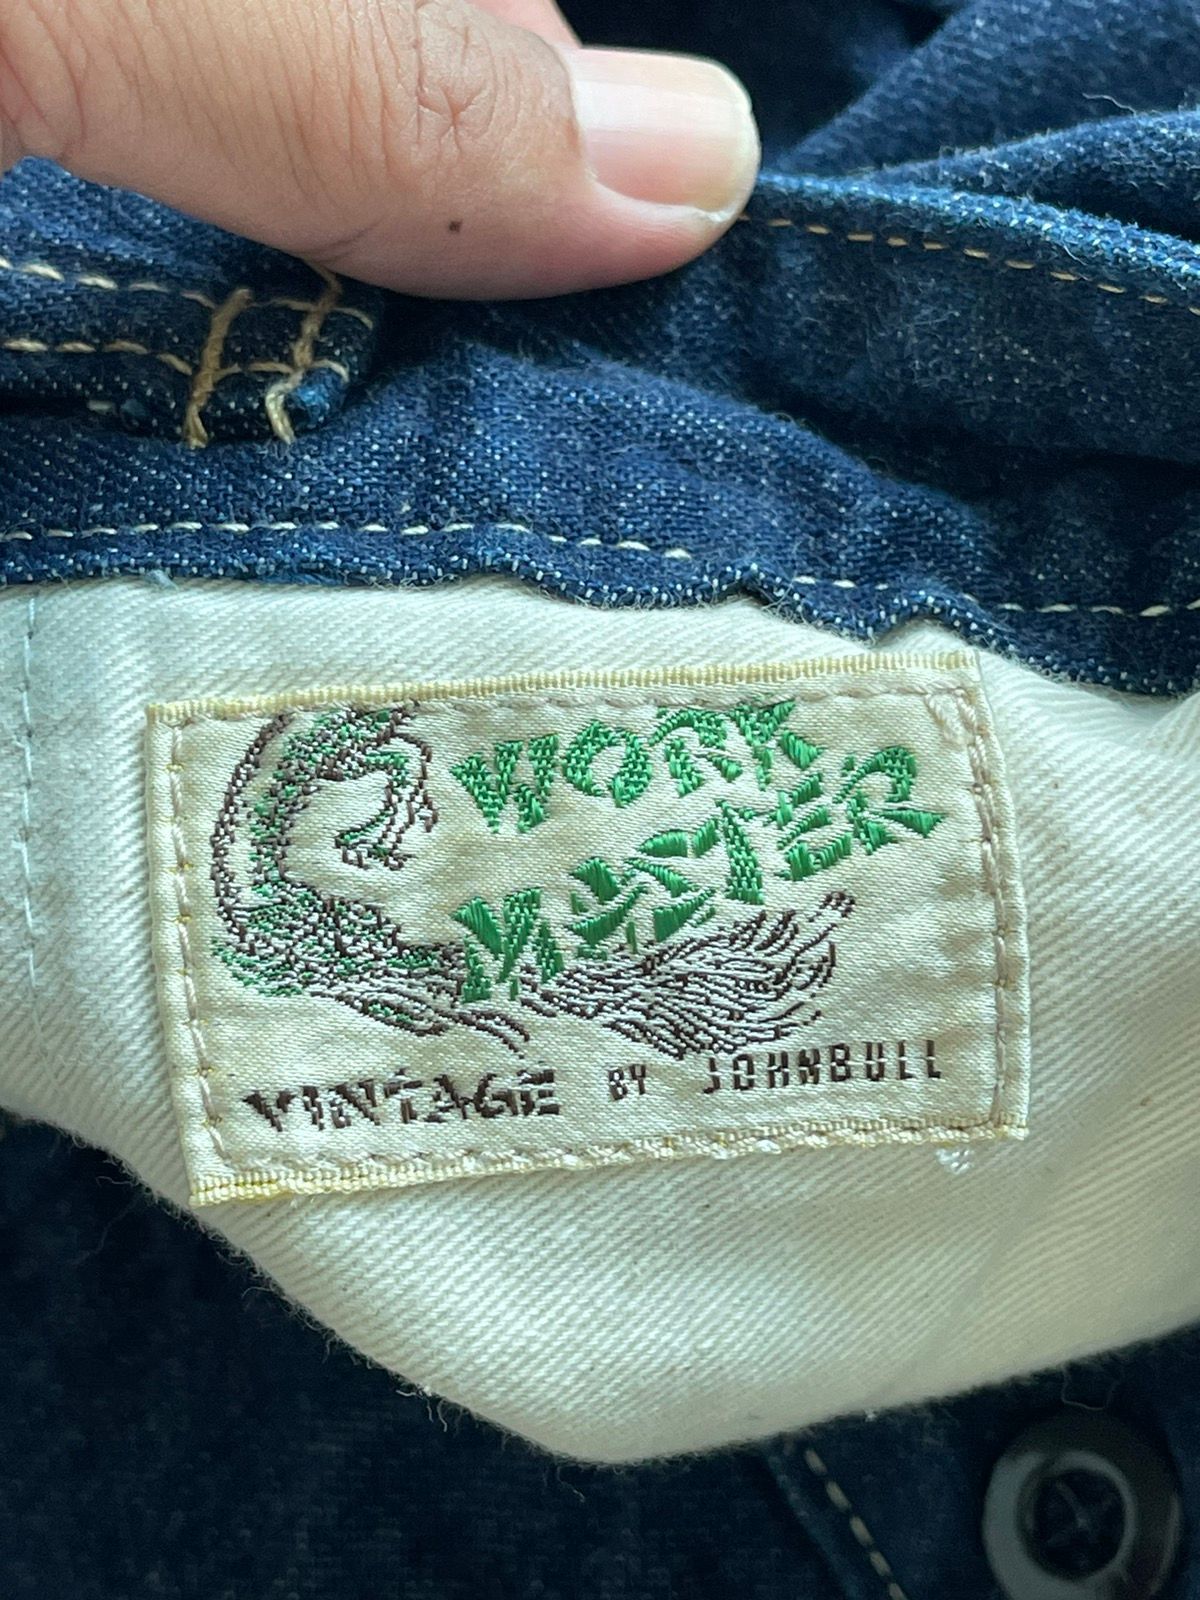 Vintage John Bull Workwear denim pant - 3